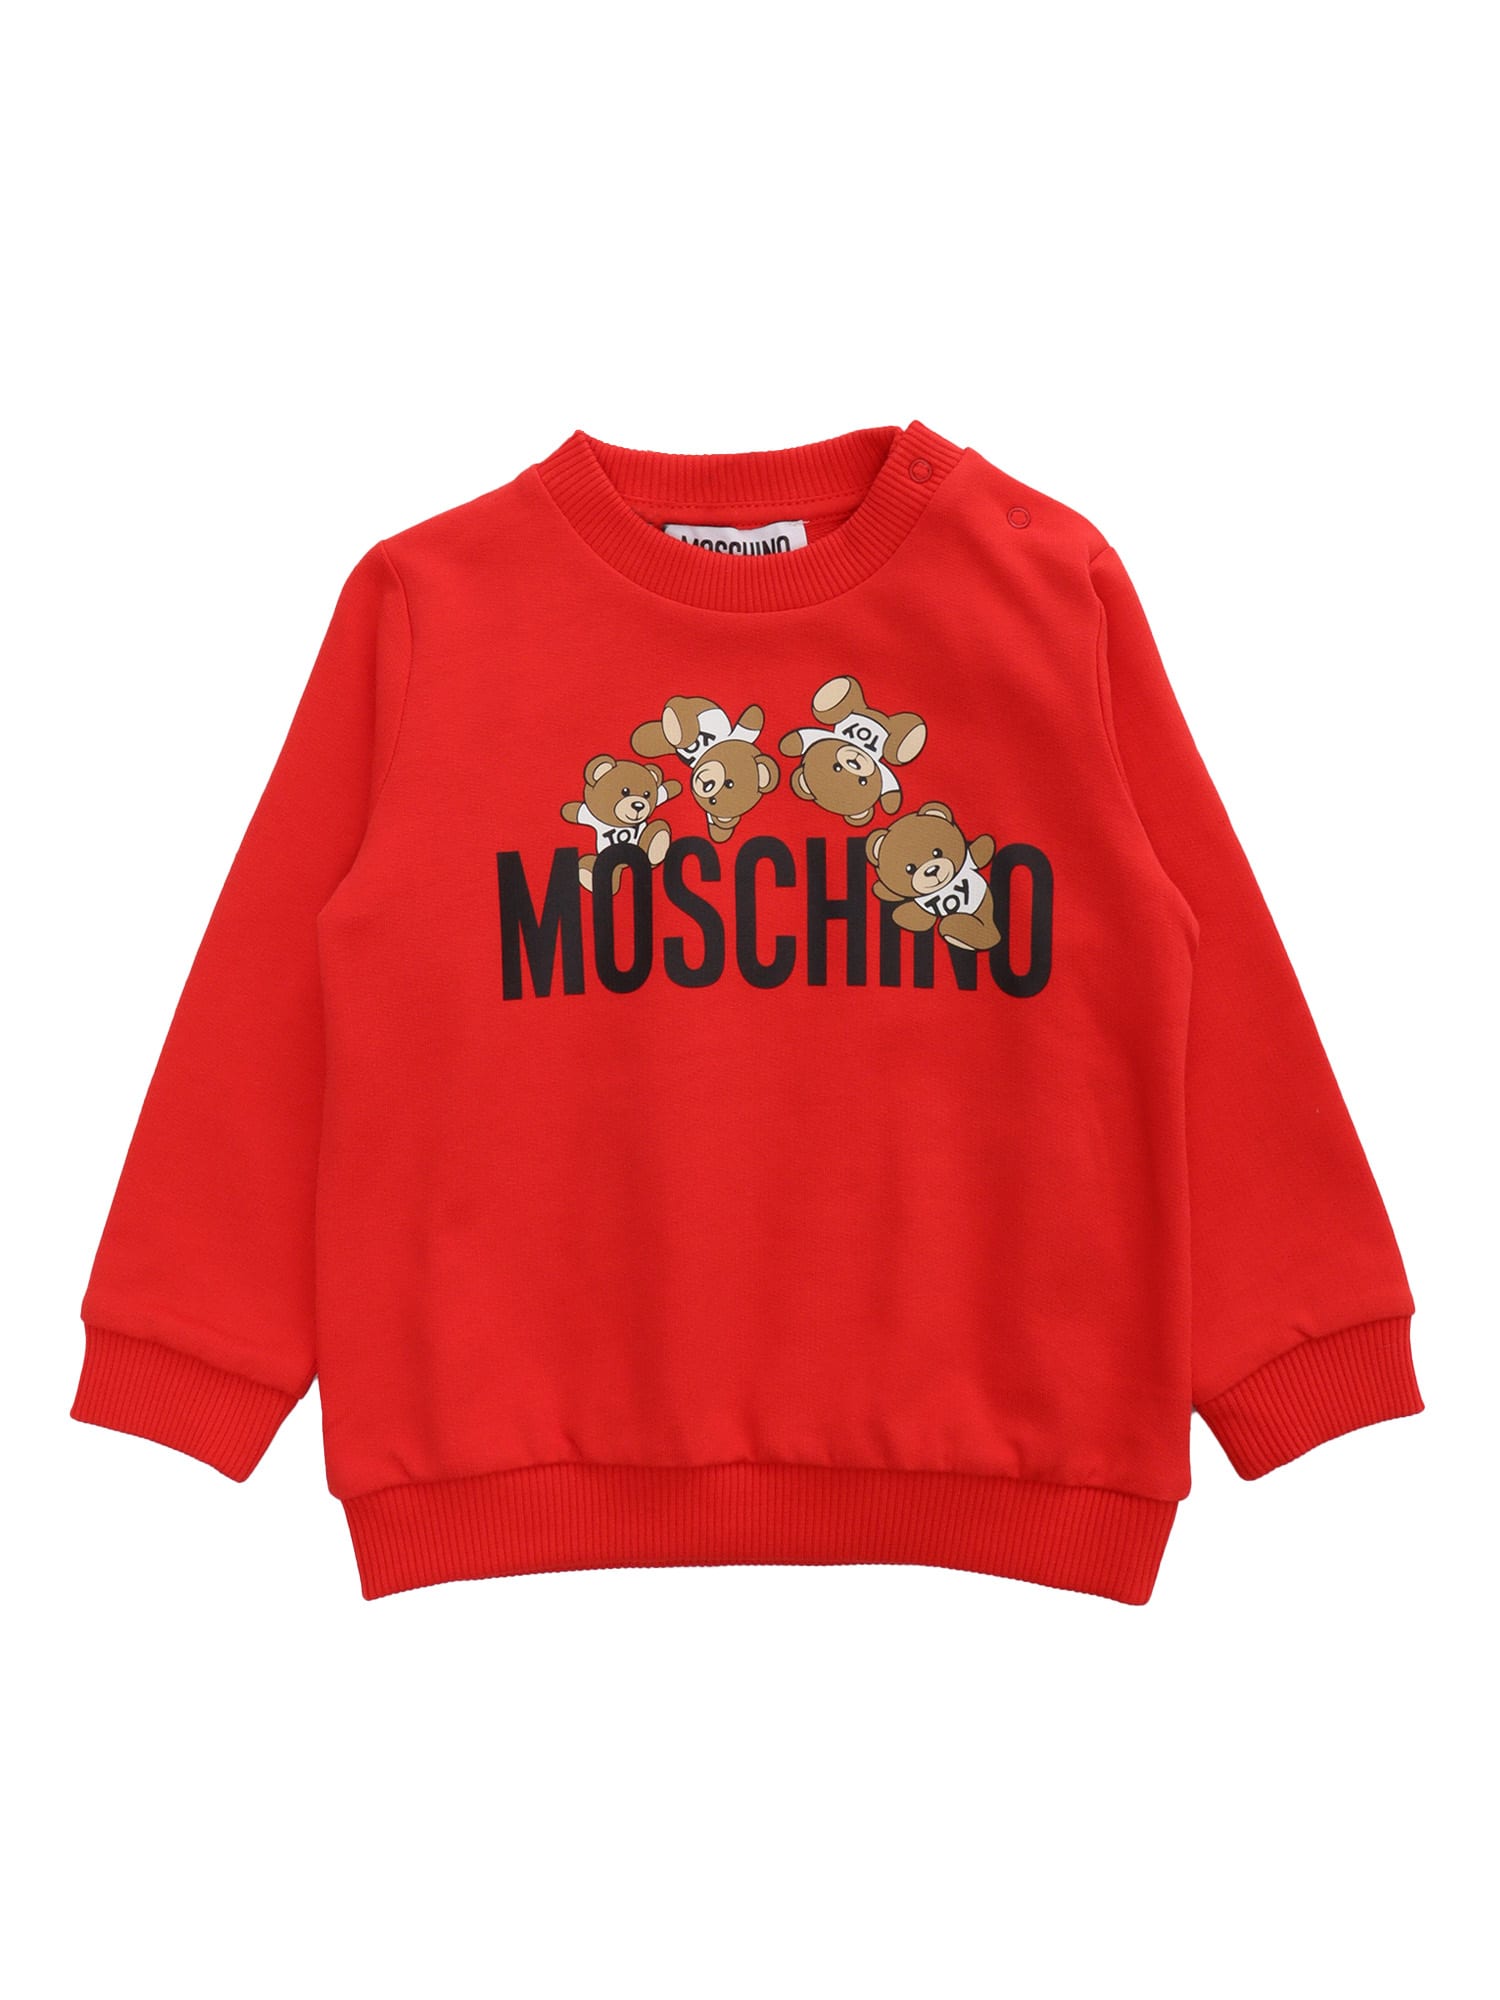 Moschino Babies' Red Sweatshirt With Print